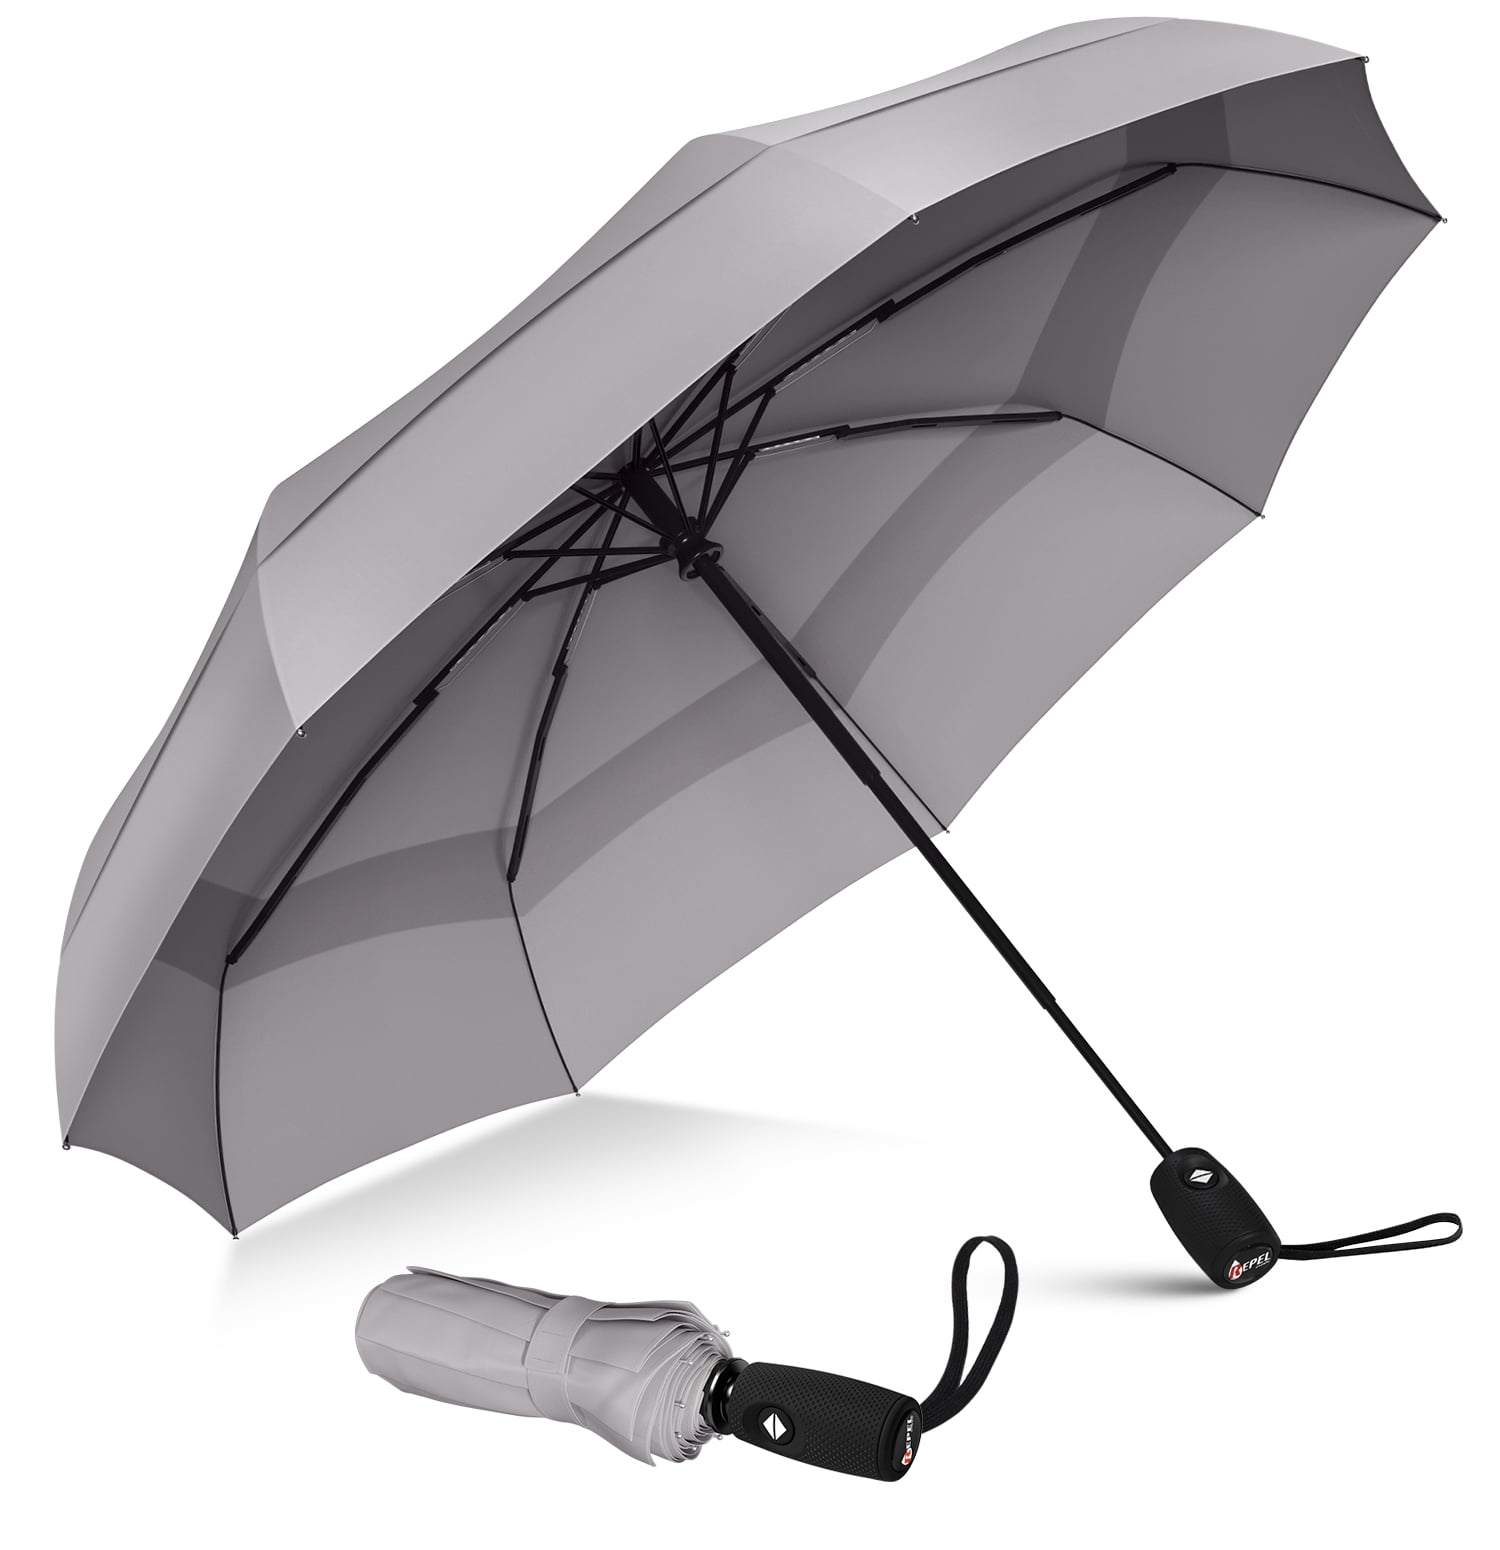 Rain-Proof Reinforced Canopy Sun-Proof And Wind-Proof Umbrella Mastiff Pattern Travel Uv Umbrella Lady Men-Automatic Open And Close